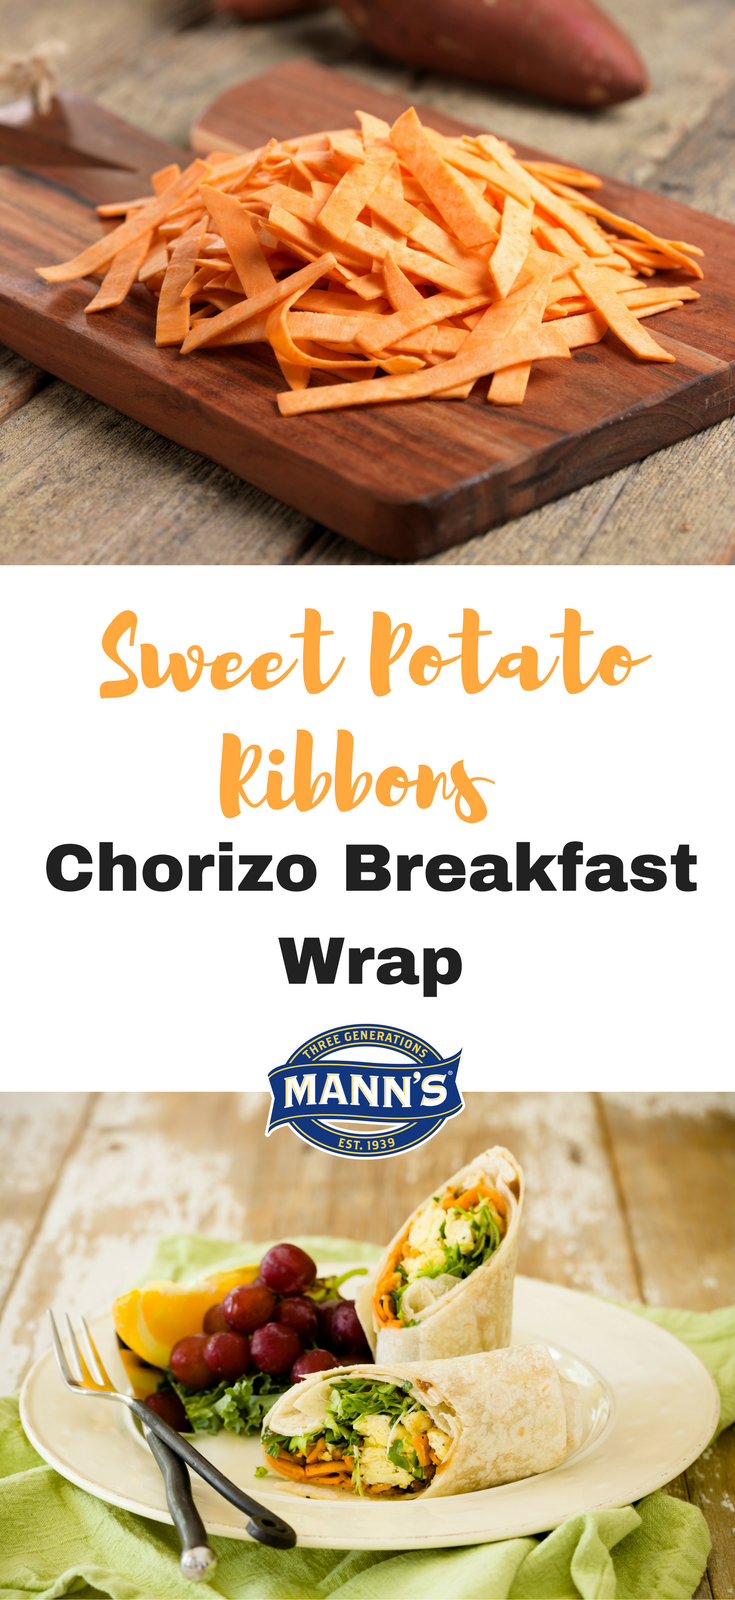 Sweet Potato Ribbons Chorizo Breakfast Wrap | Mann's Fresh Vegetables